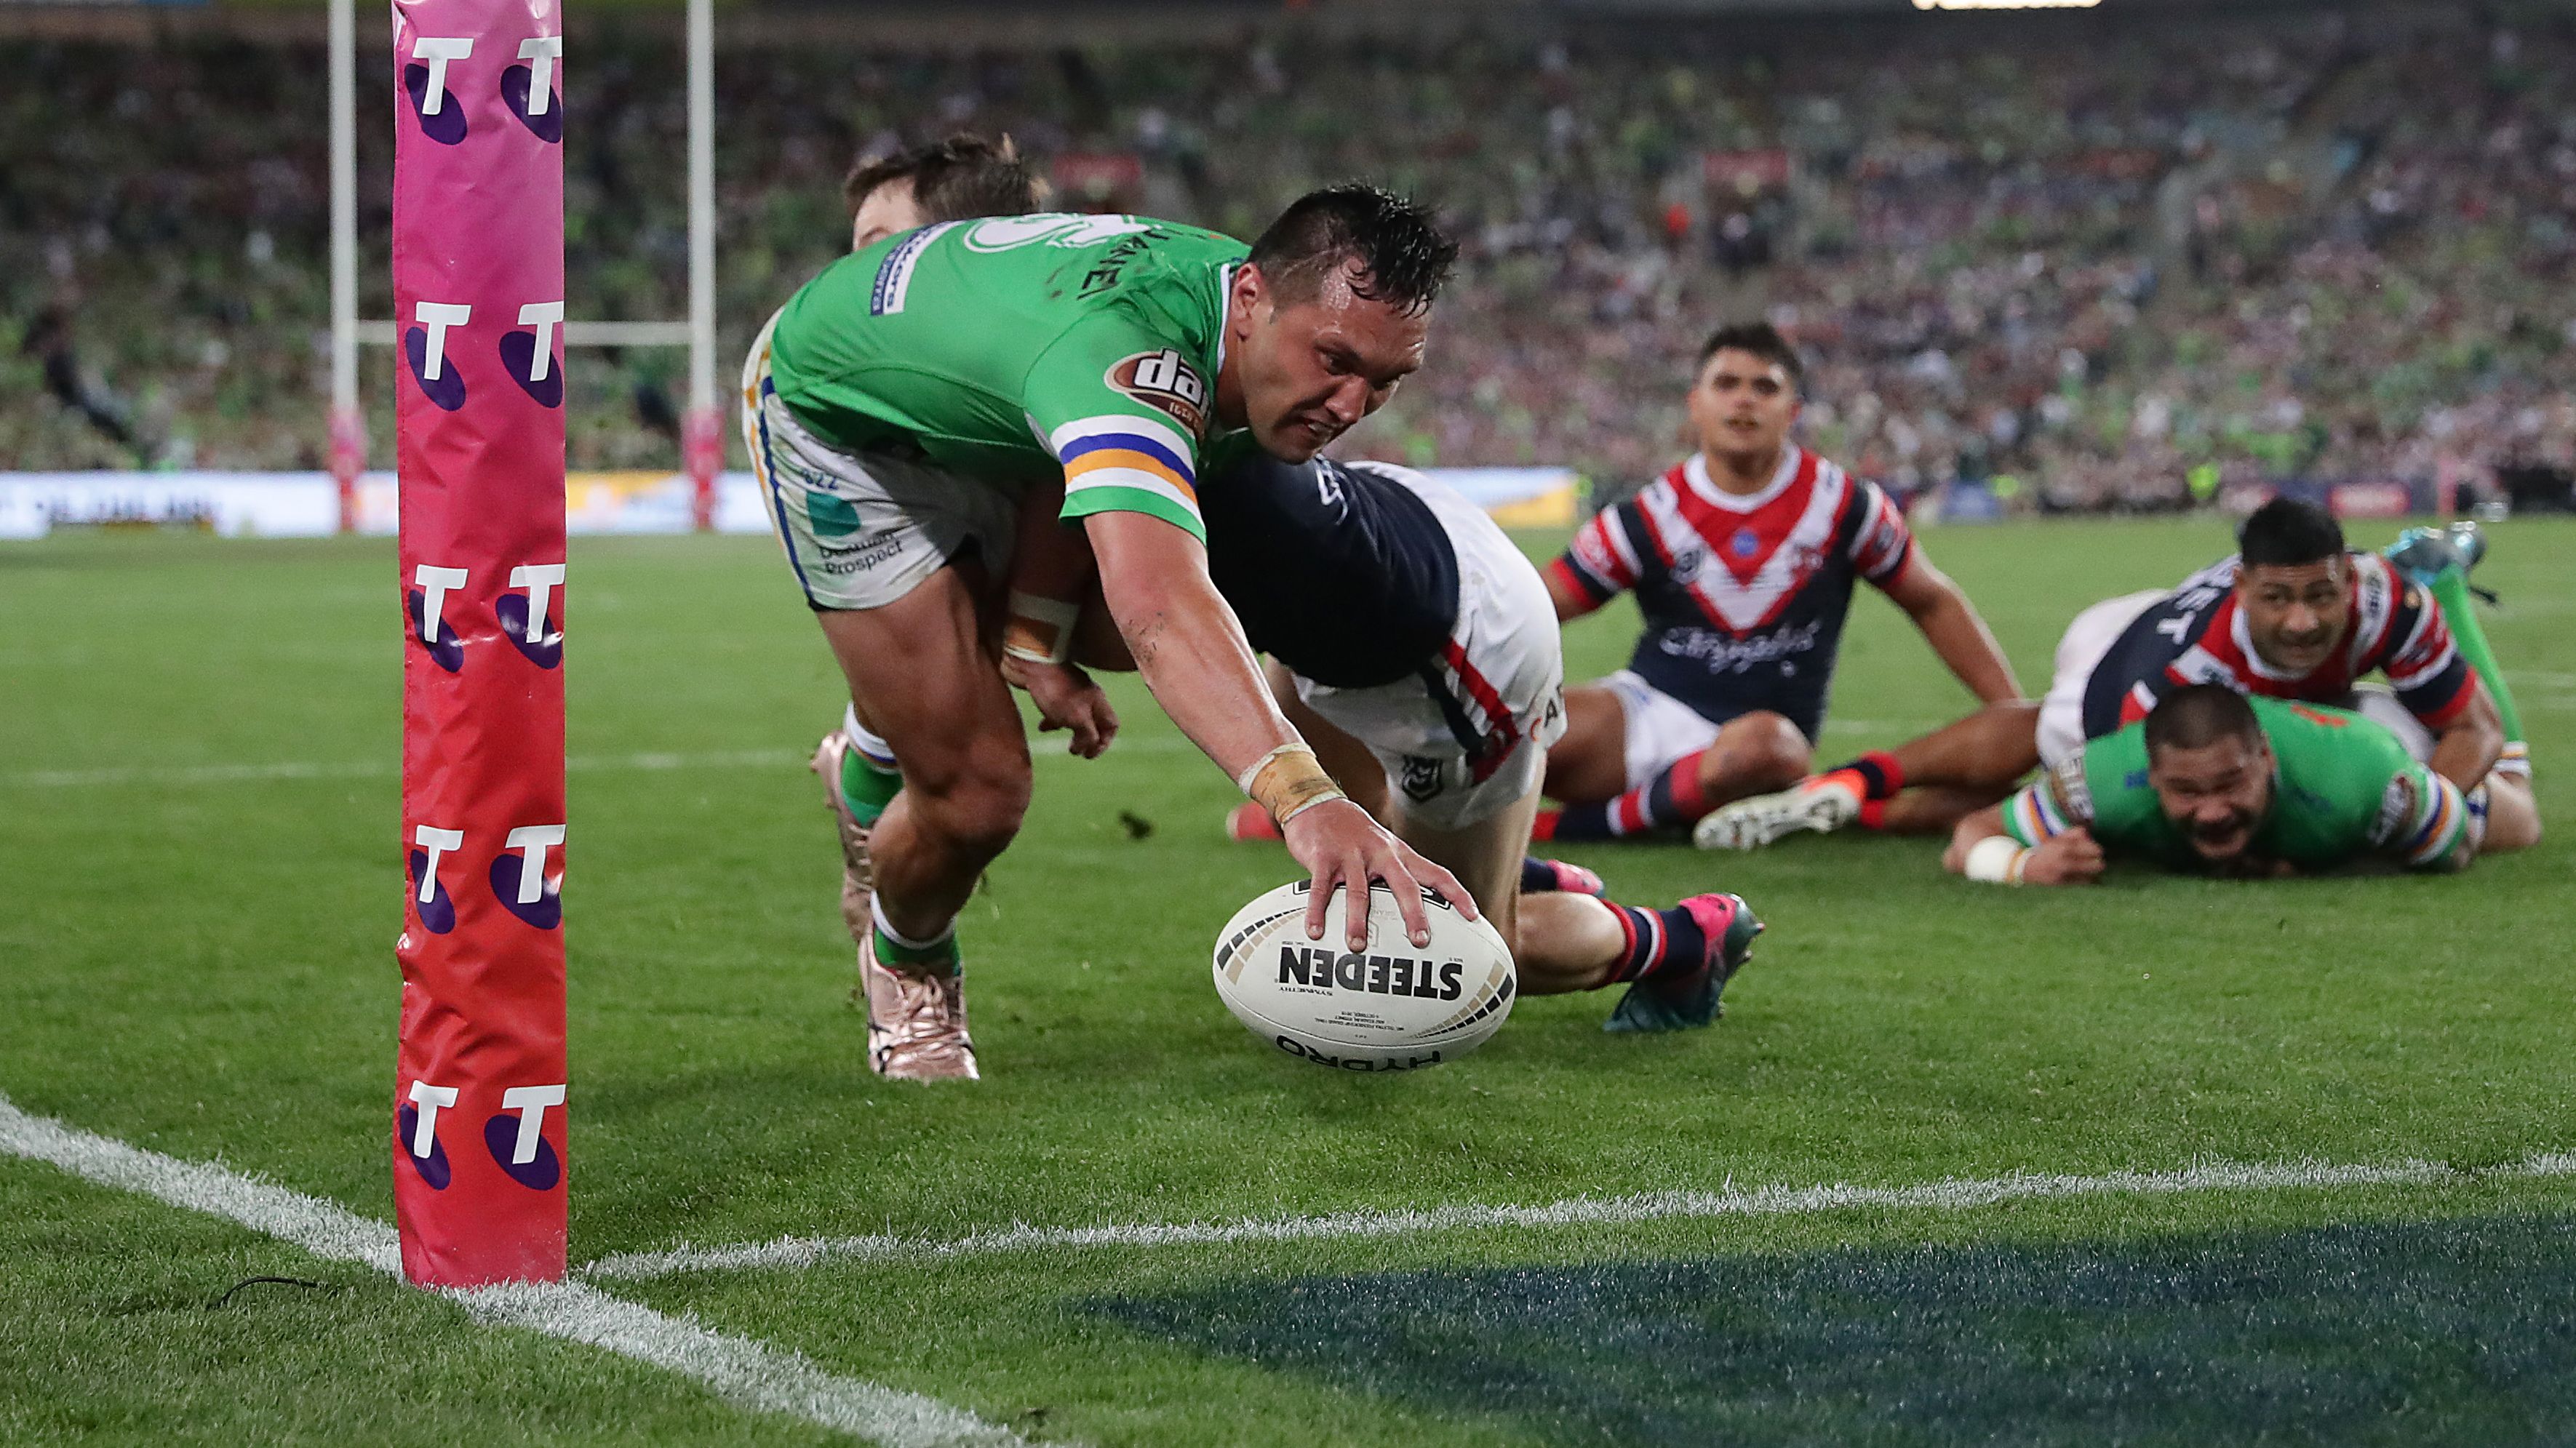 Rugby off his radar, Jordan Rapana hopes to make Canberra Raiders return permanent